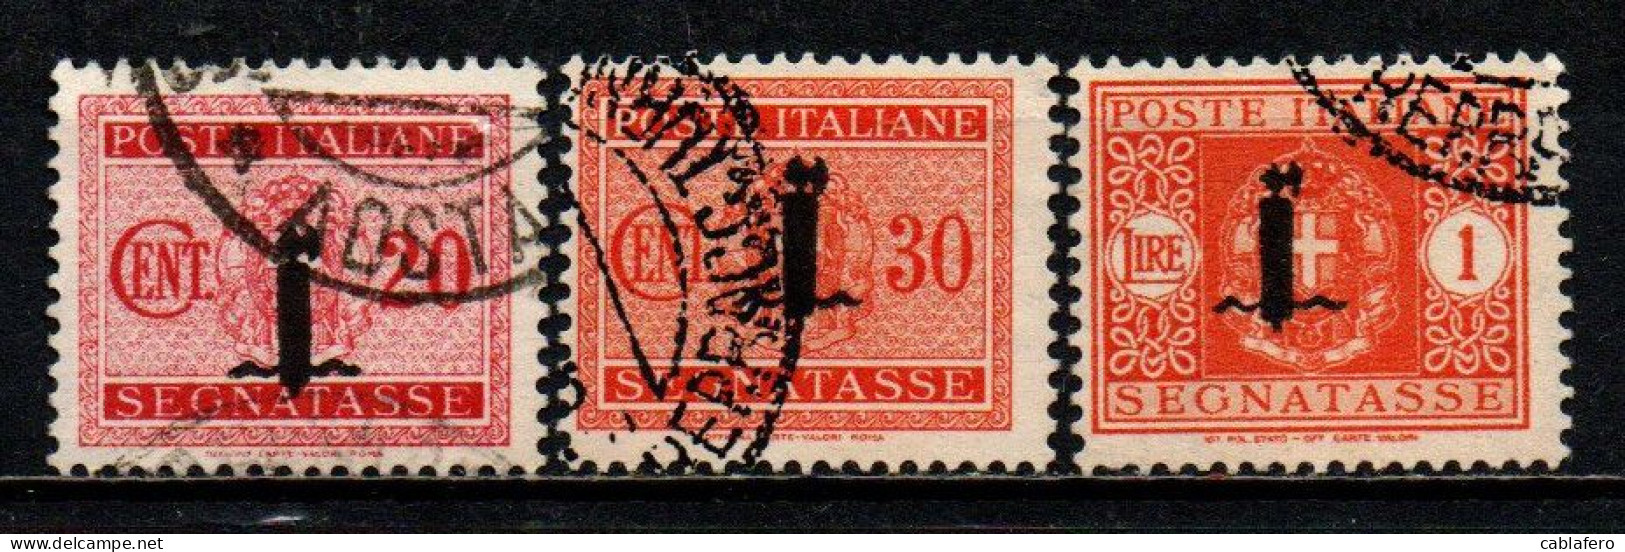 ITALIA RSI - 1944 - SEGNATASSE - FASCETTO - 20 E 30 CENT + 1 LIRA - USATI - Segnatasse